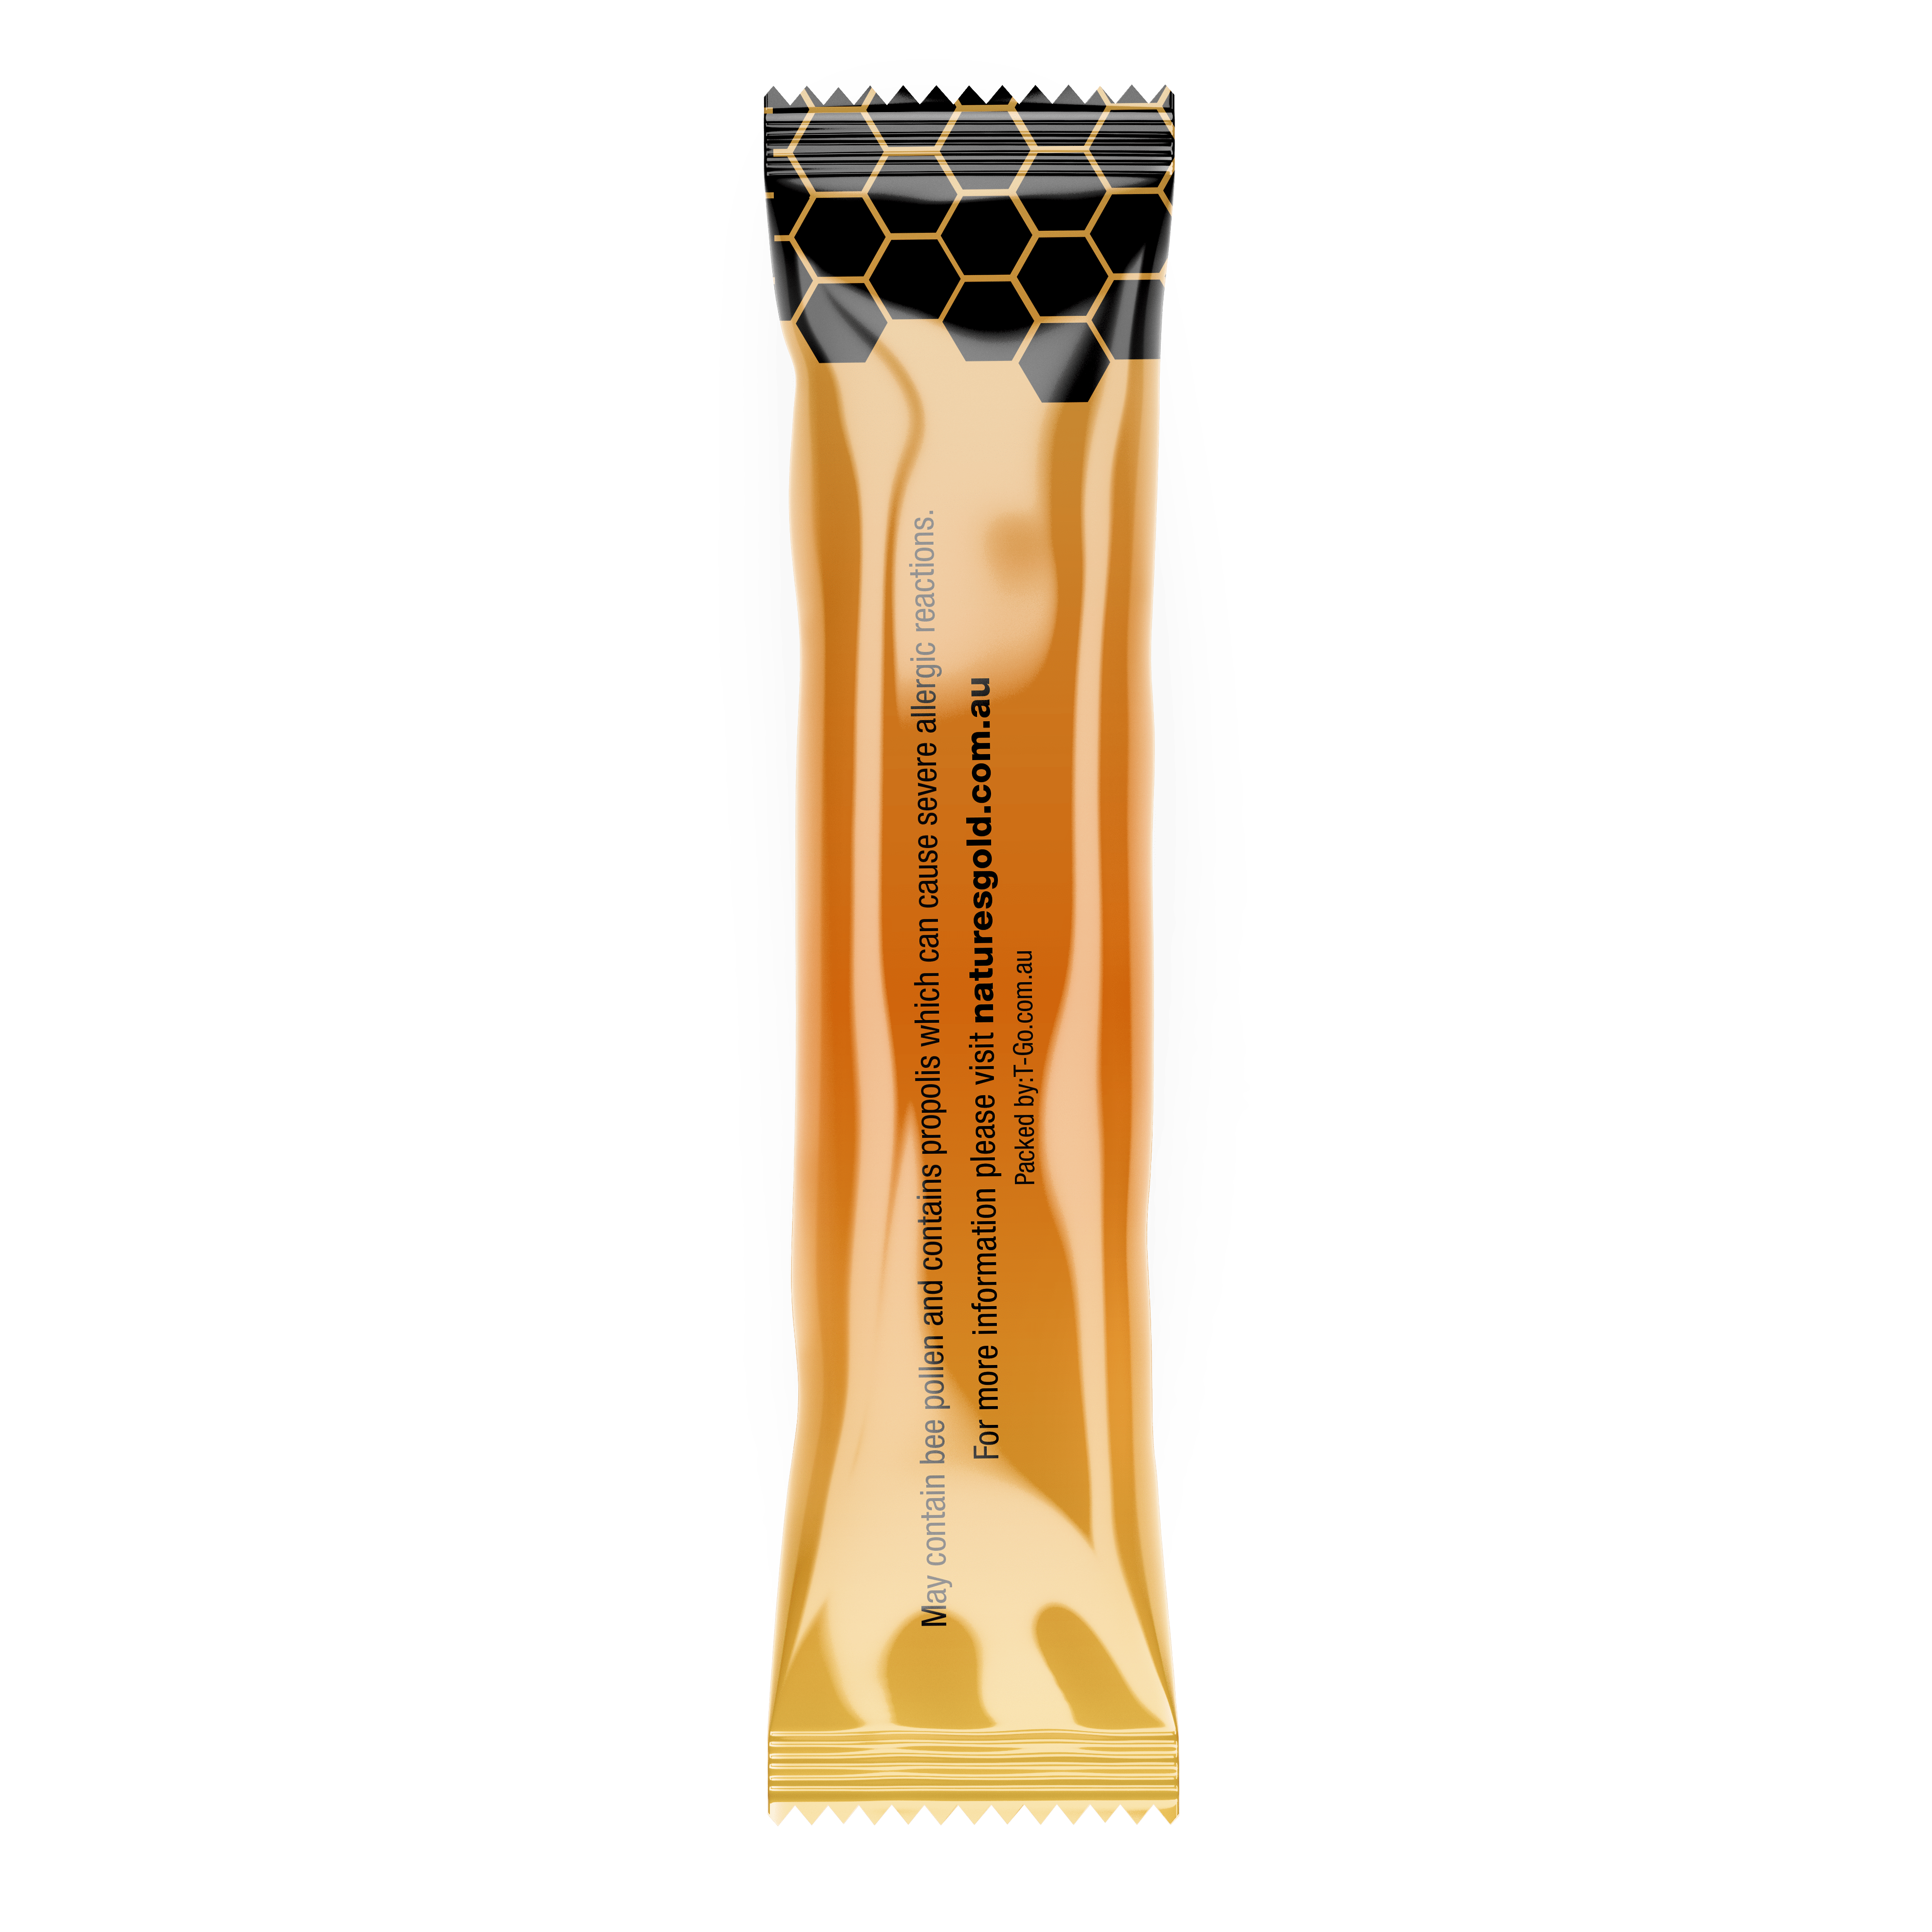 Premium Manuka Honey Sachets with Australian Native Bee Propolis - MGO 263